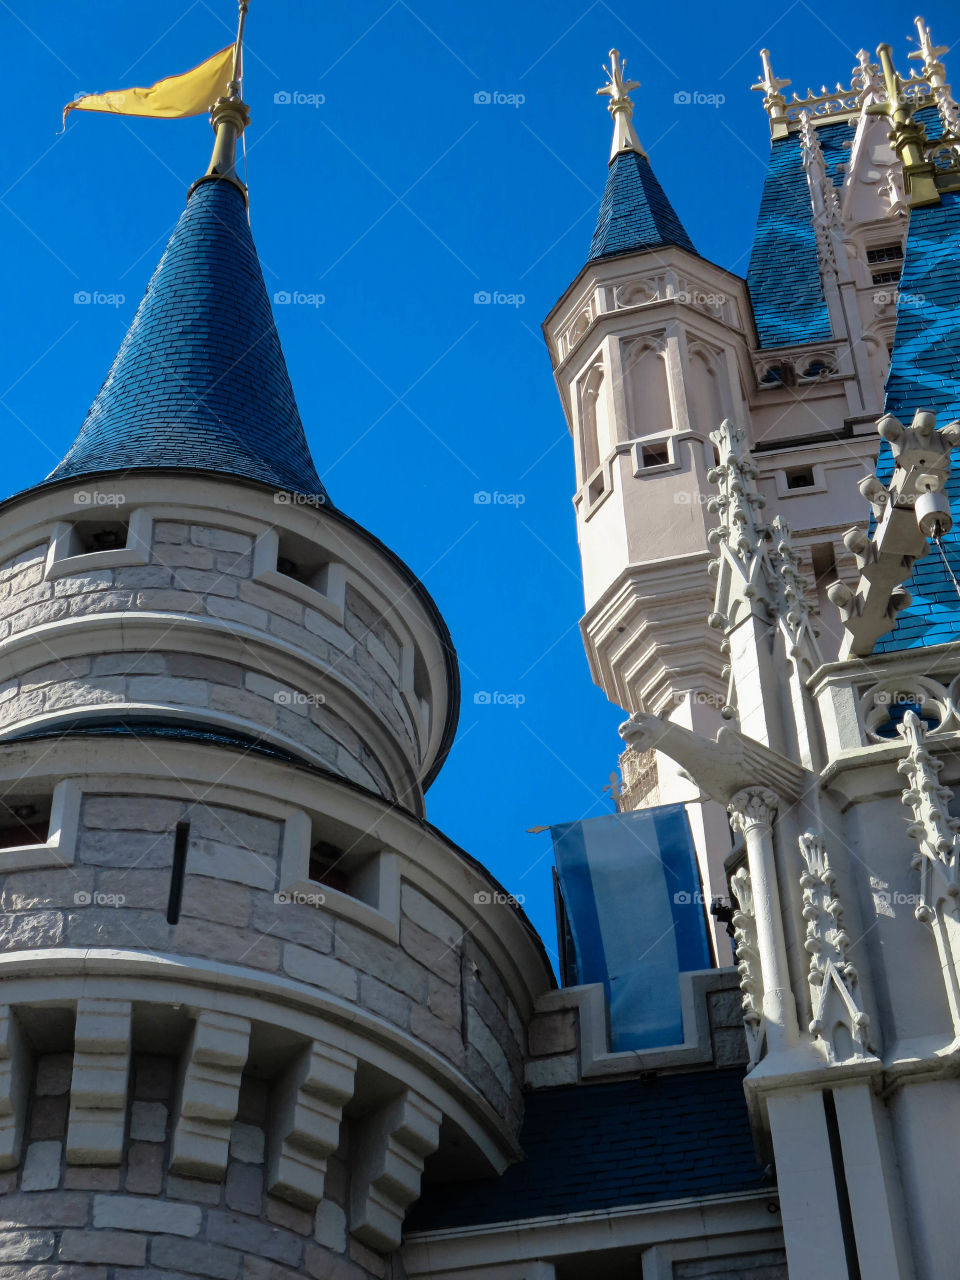 When you wish upon a star. Cinderella's Castle at Disney World in Orlando, Florida.